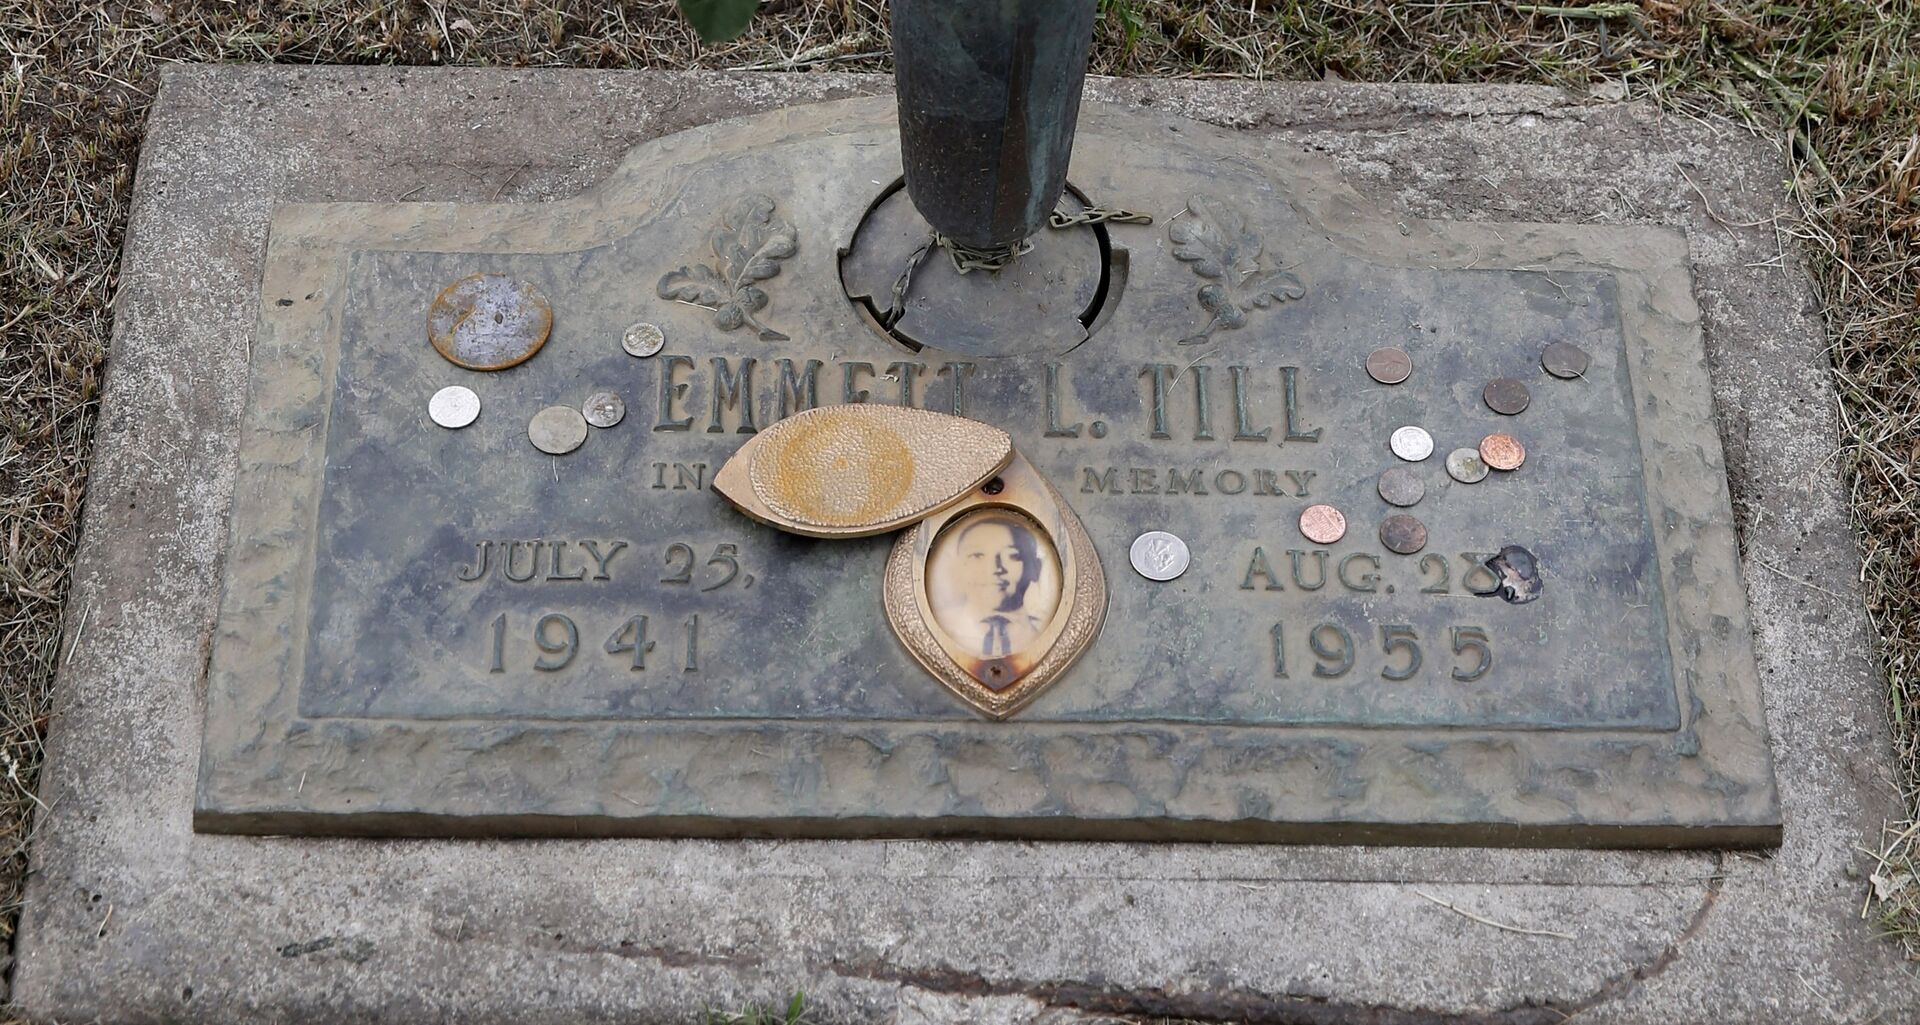 Gravesite of Emmett Till, whose 1955 lynching helped spark the Civil Rights Movement. - Sputnik International, 1920, 09.08.2022